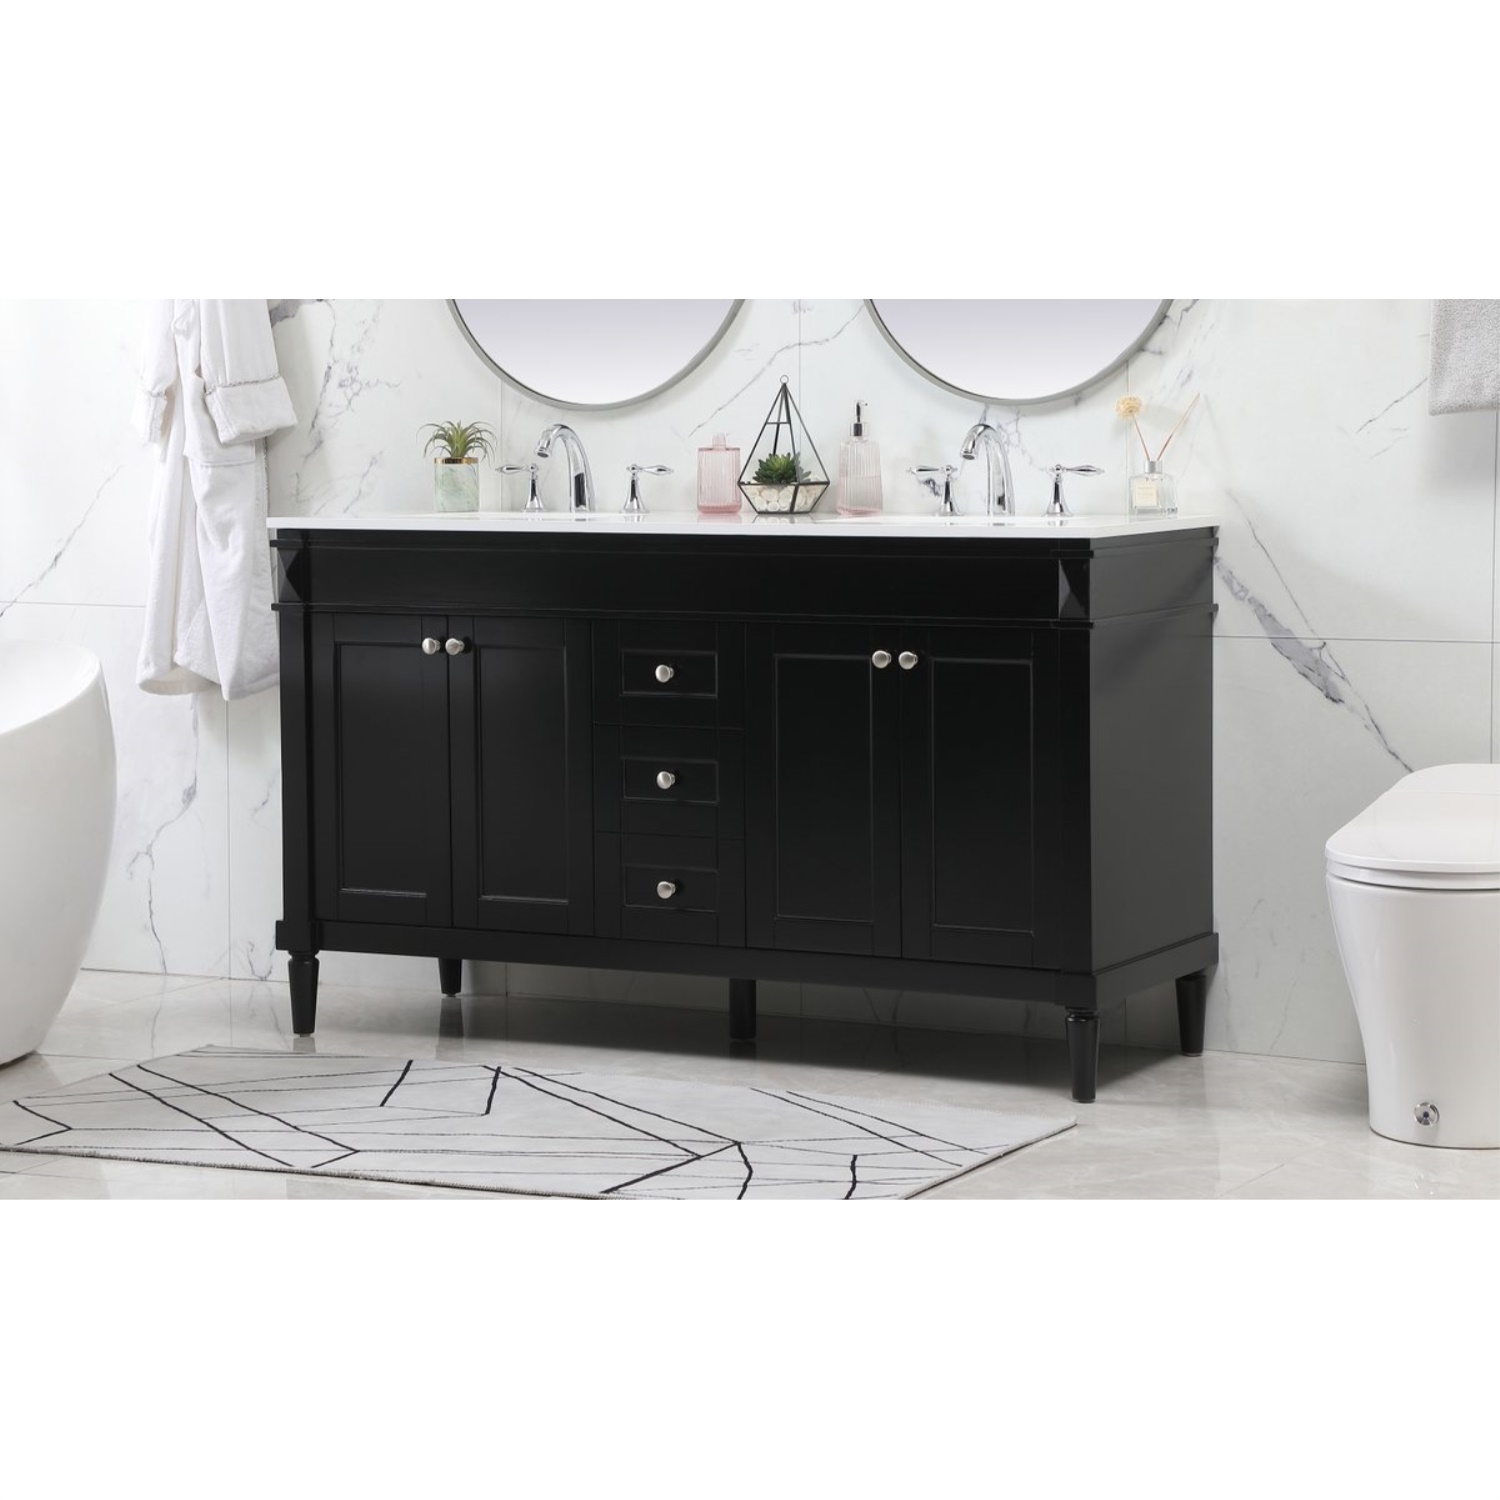 Elegant Decor 60 inch double bathroom vanity in black